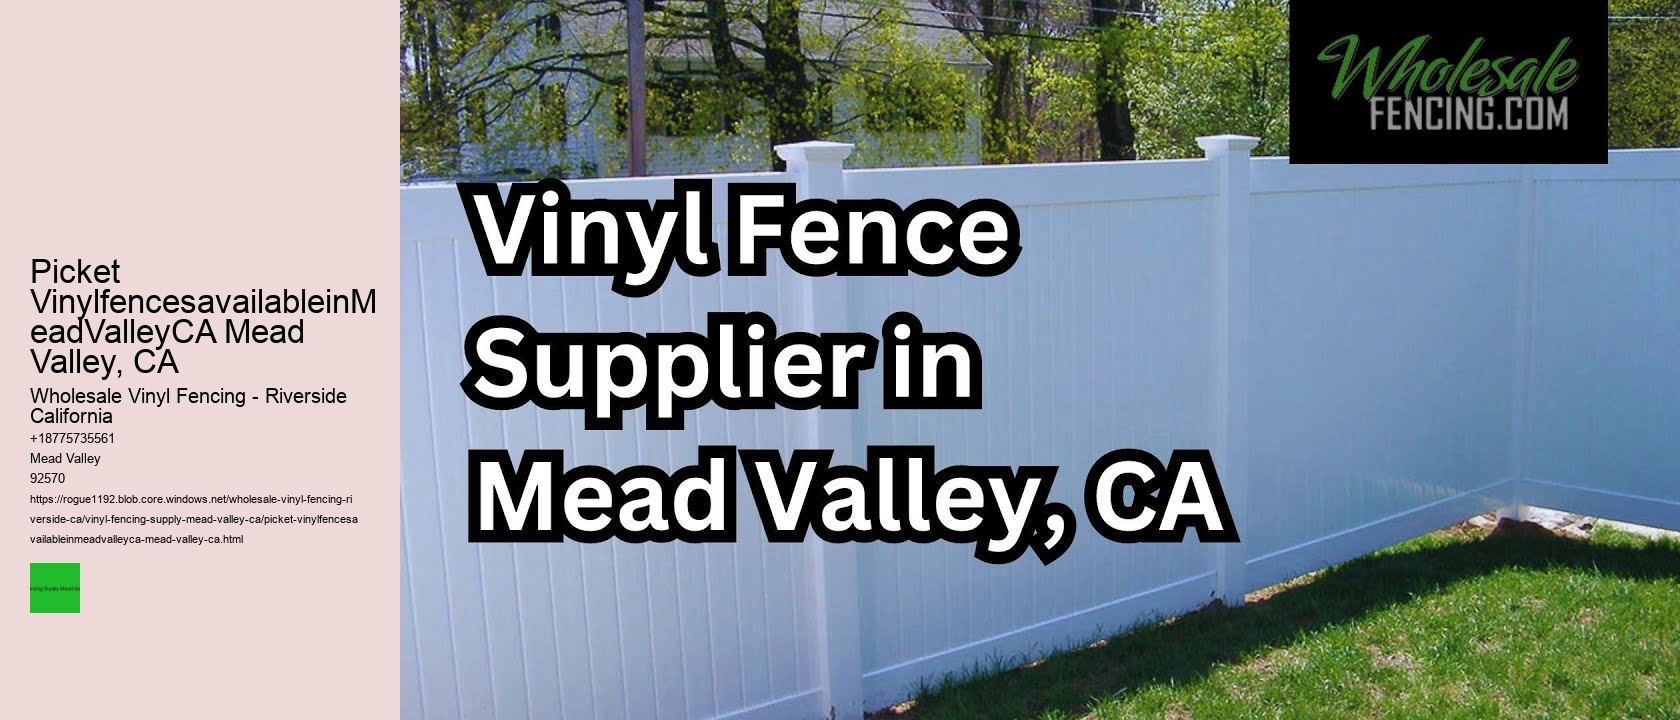 Picket VinylfencesavailableinMeadValleyCA Mead Valley, CA